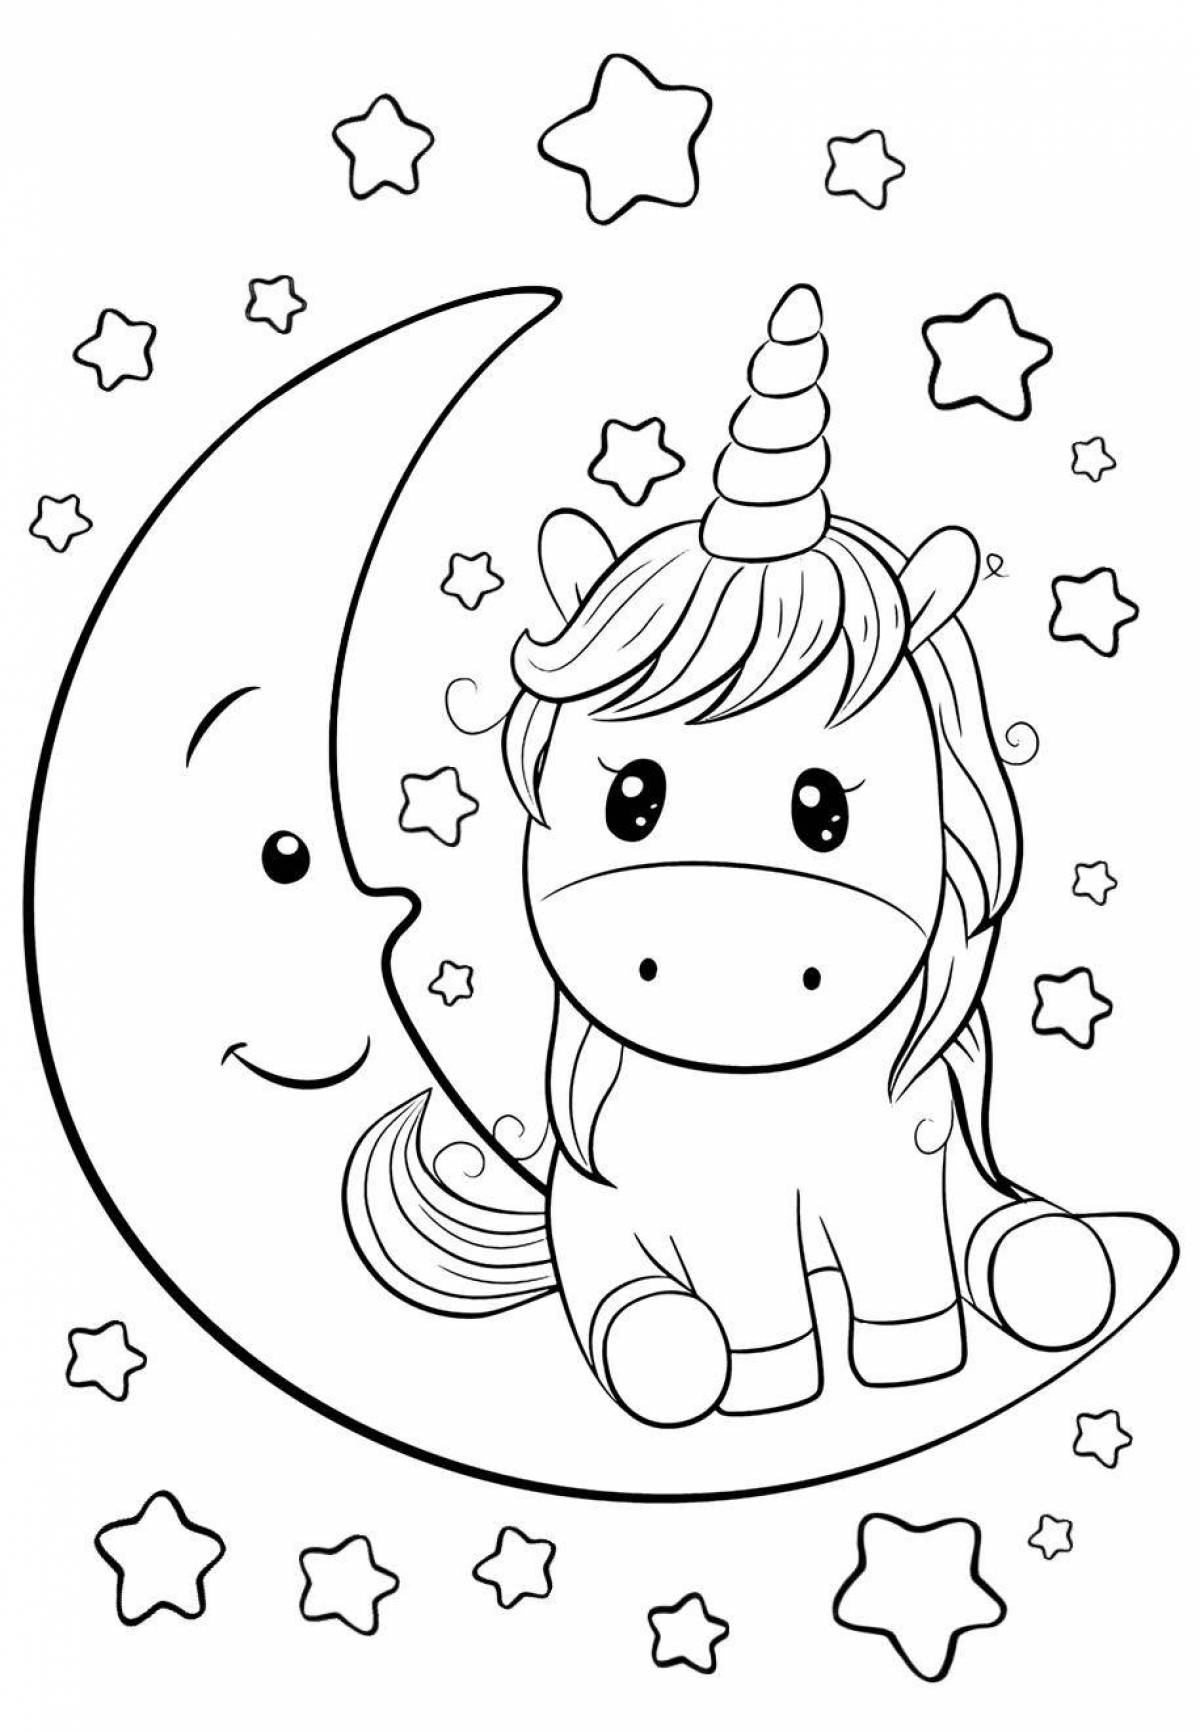 A fun unicorn coloring book for kids